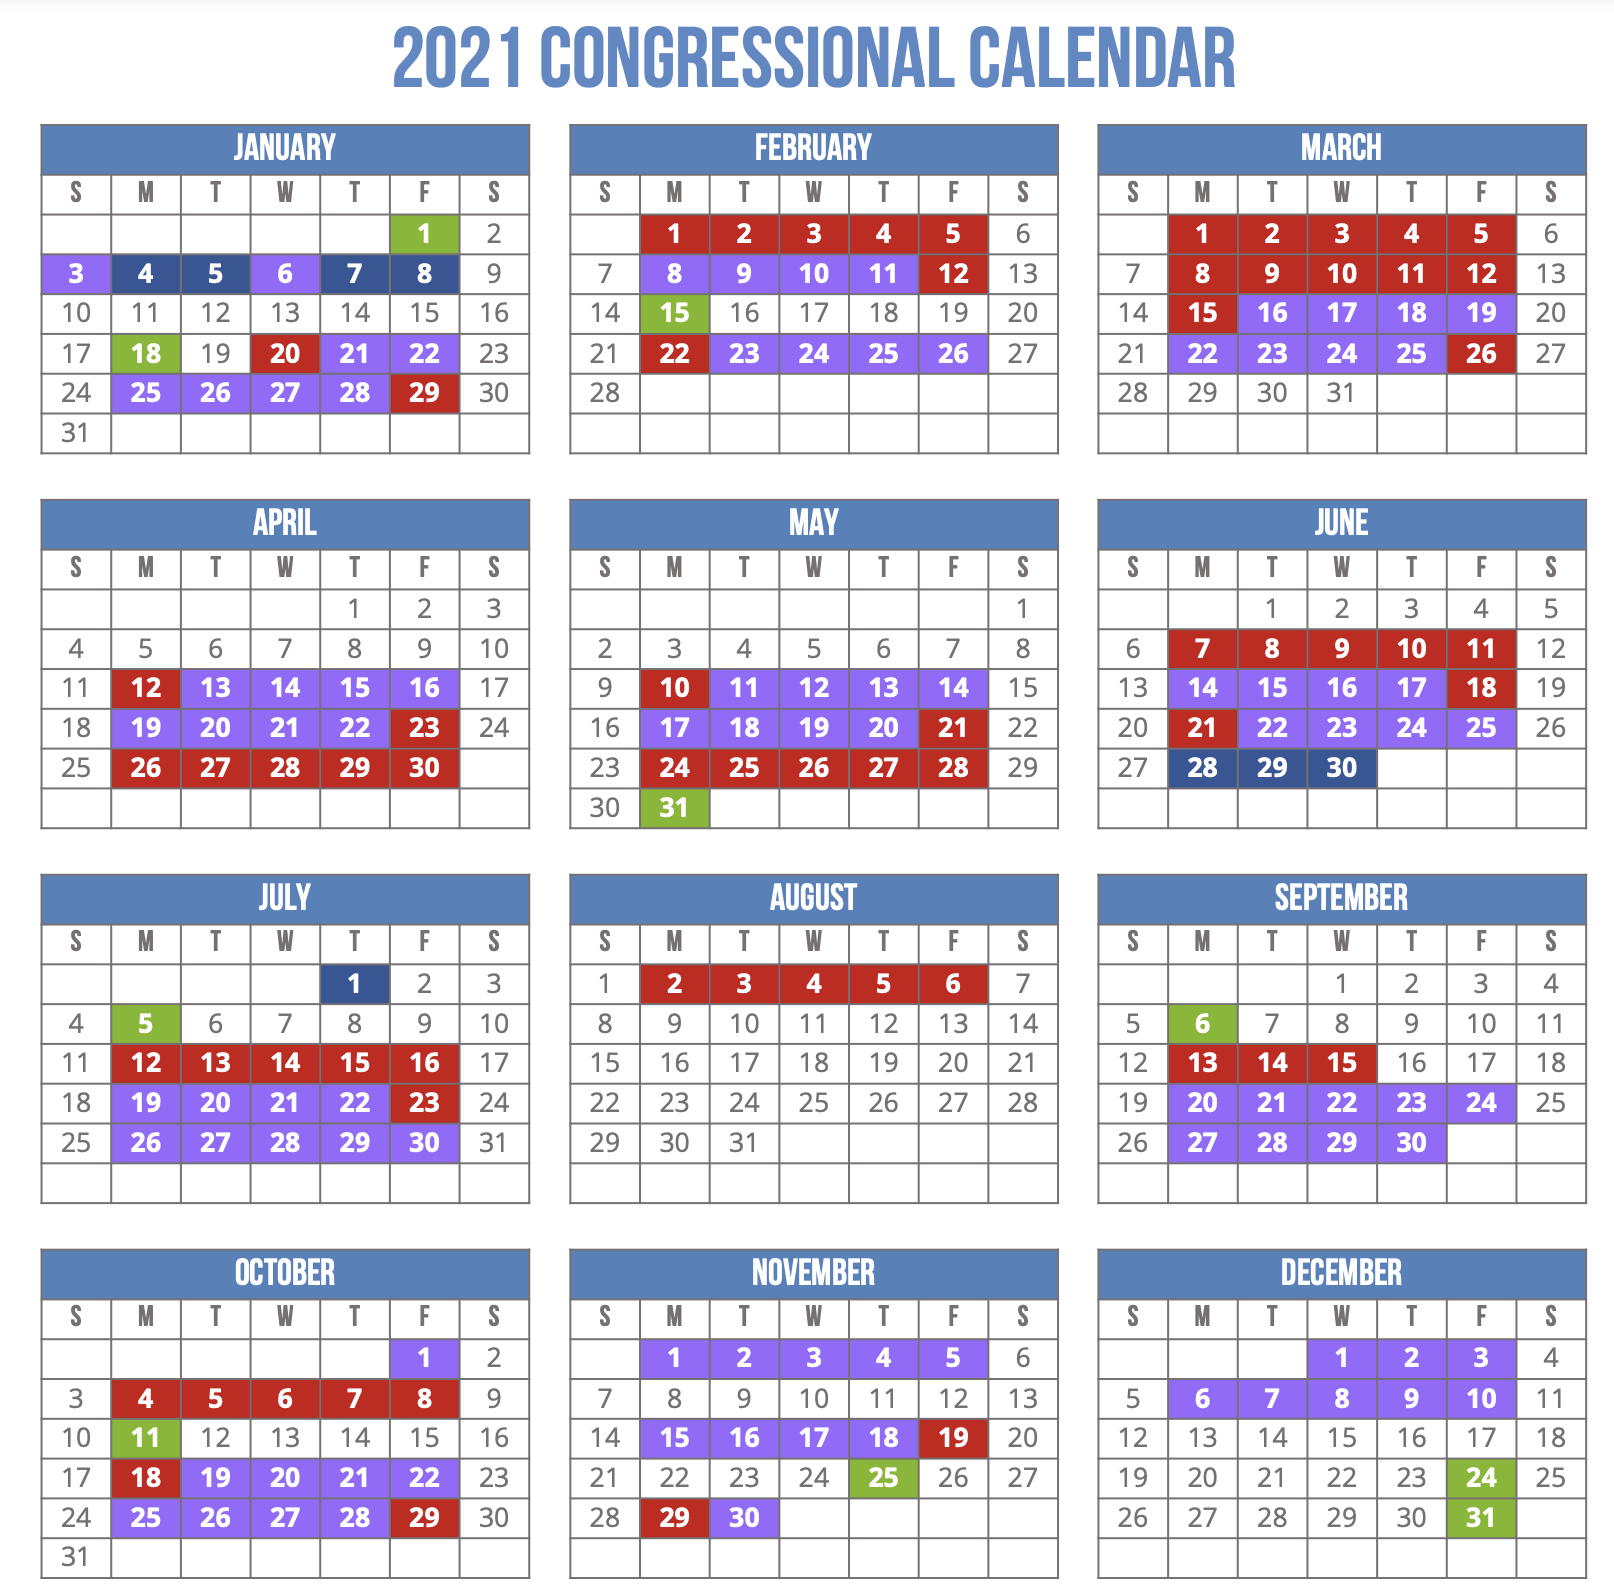 2021 Combined Congressional Calendar Rational 360